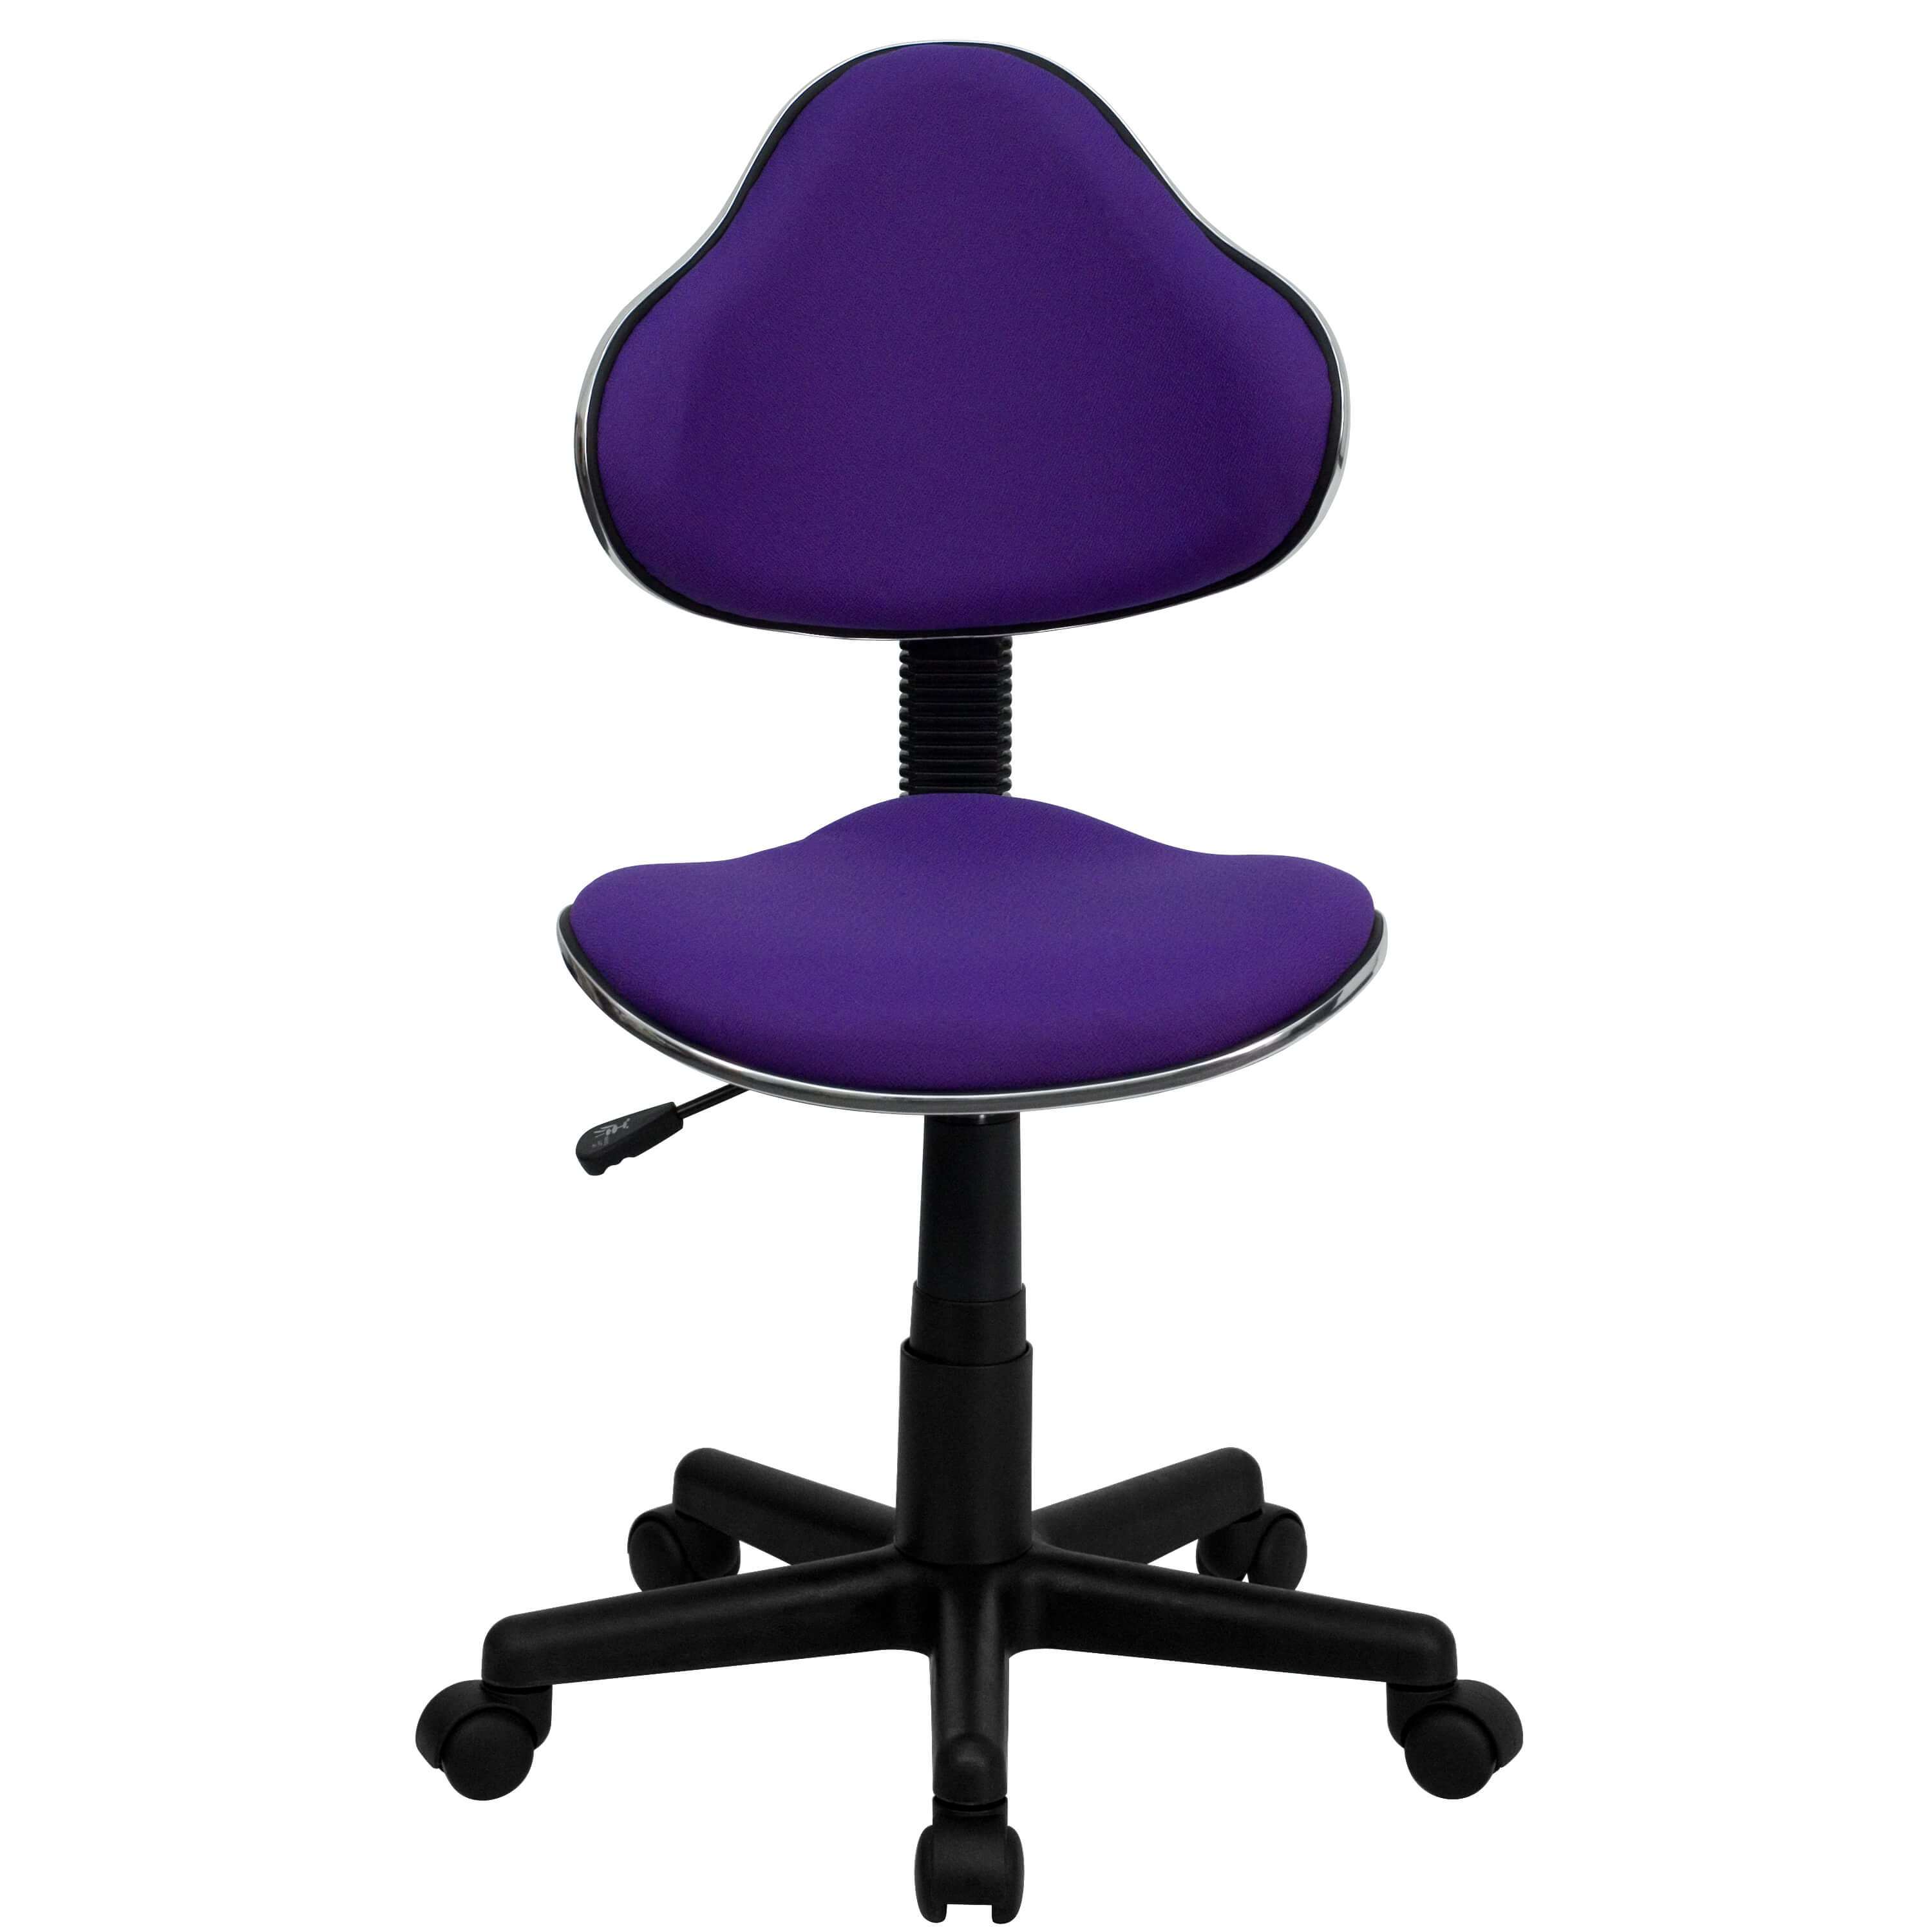 Colorful desk chairs CUB BT 699 PURPLE GG FLA